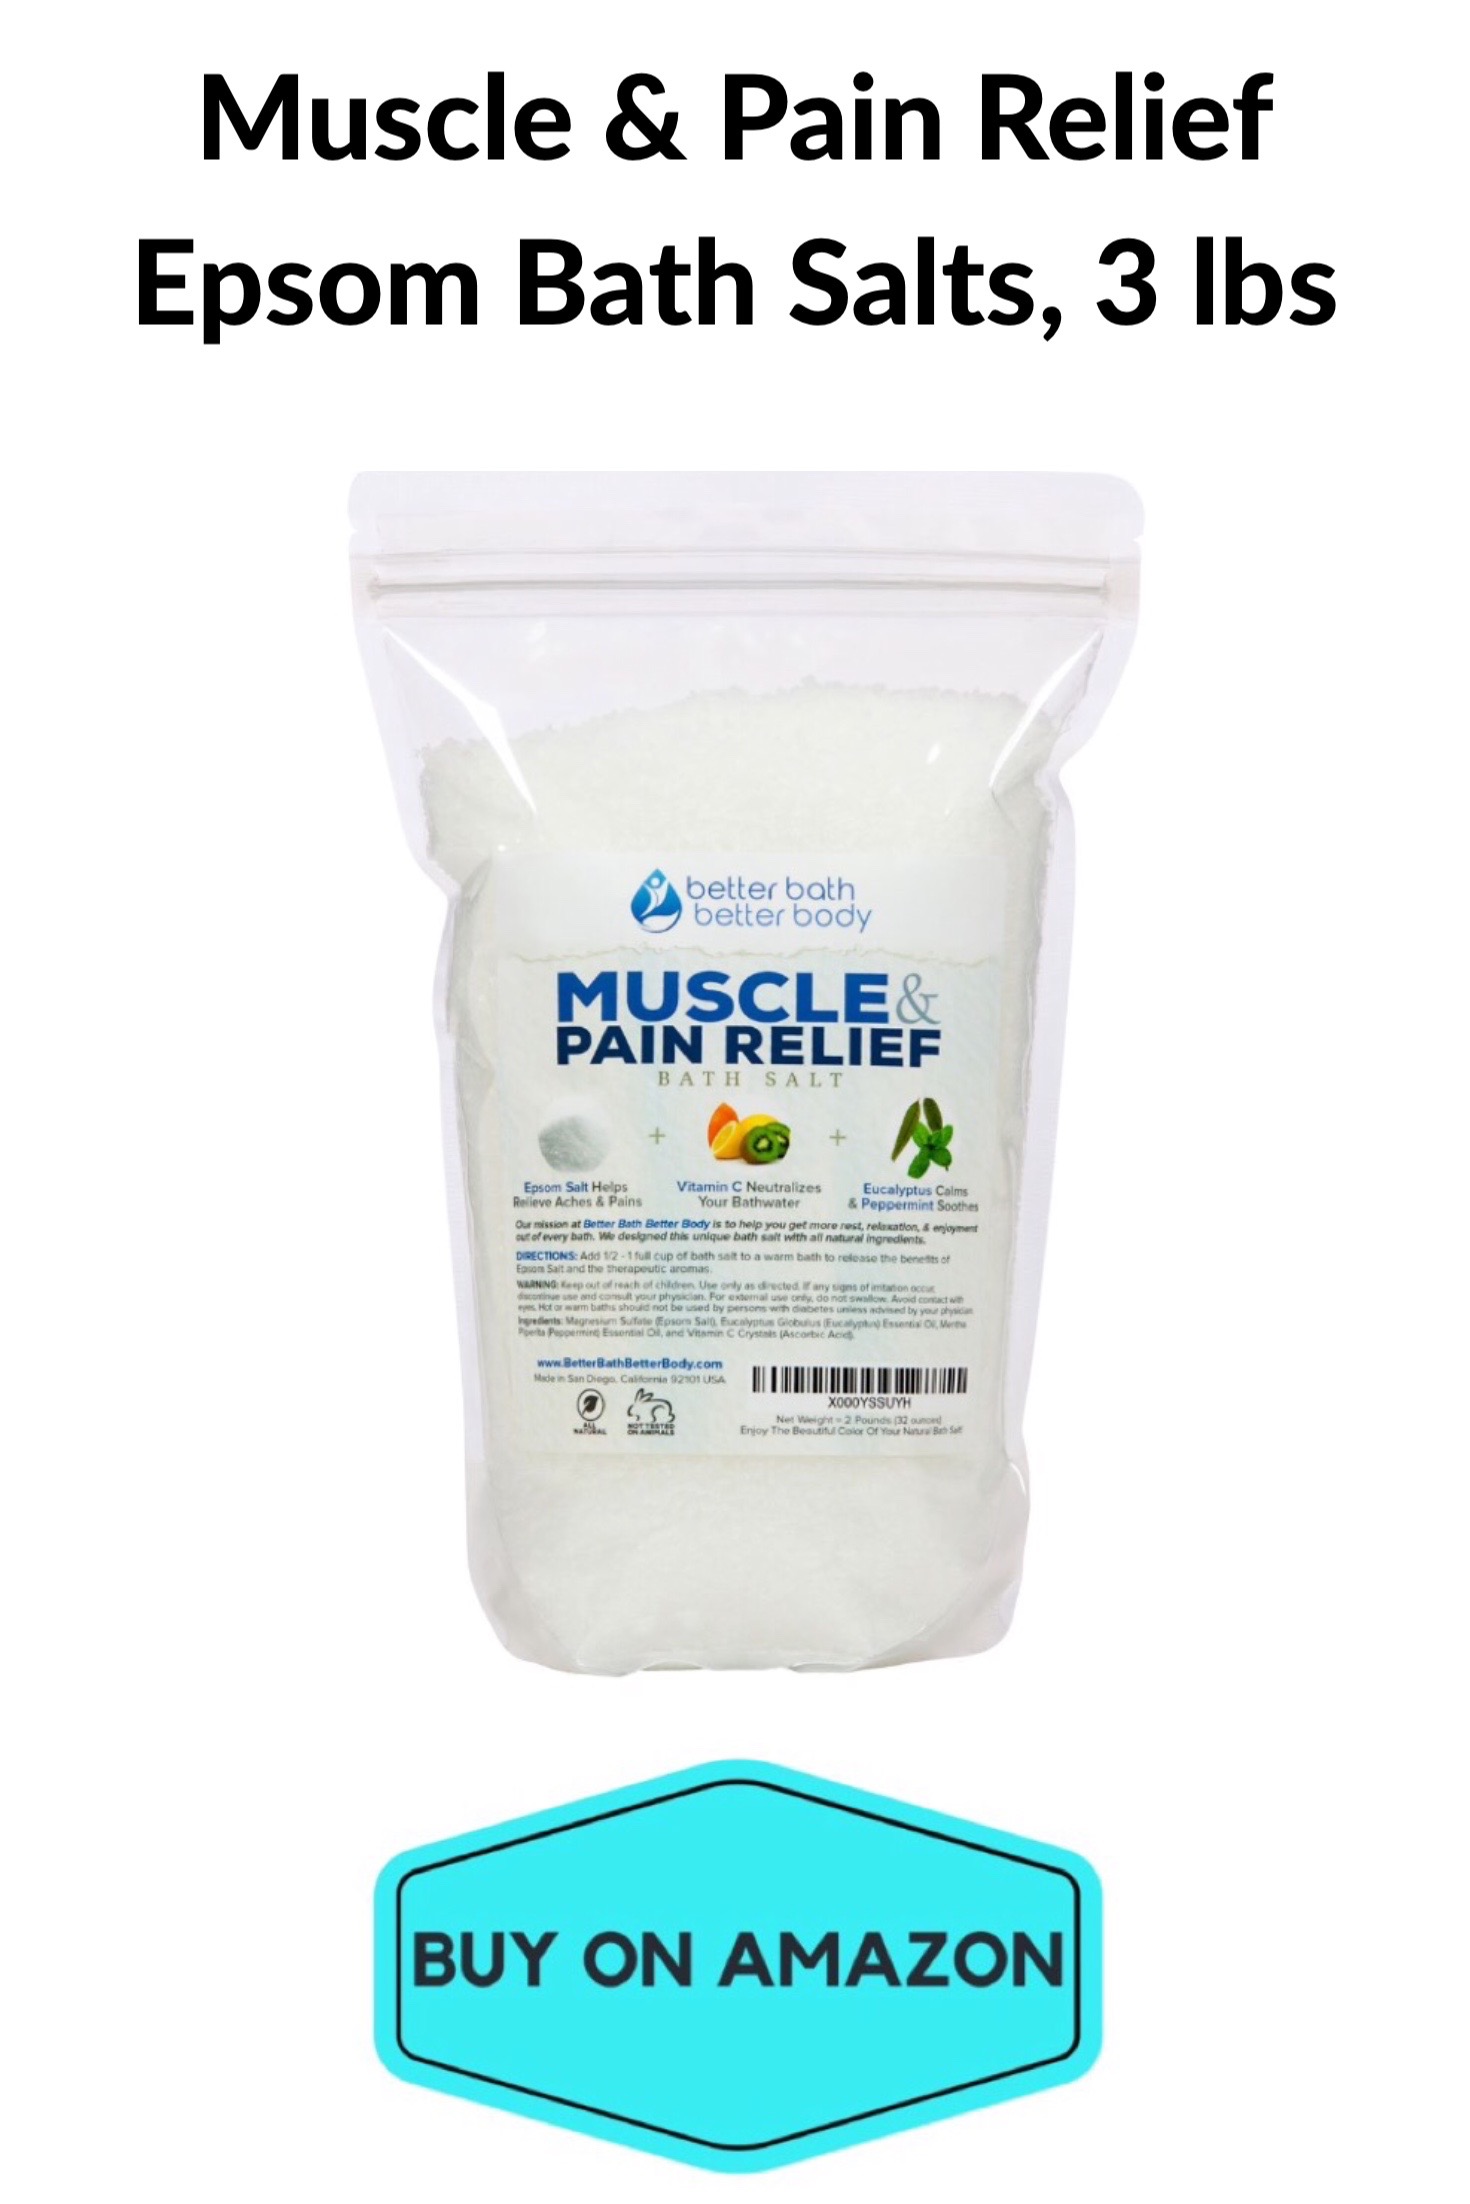 Muscle & Pain Relief Epsom Bath Salts, 3 lbs